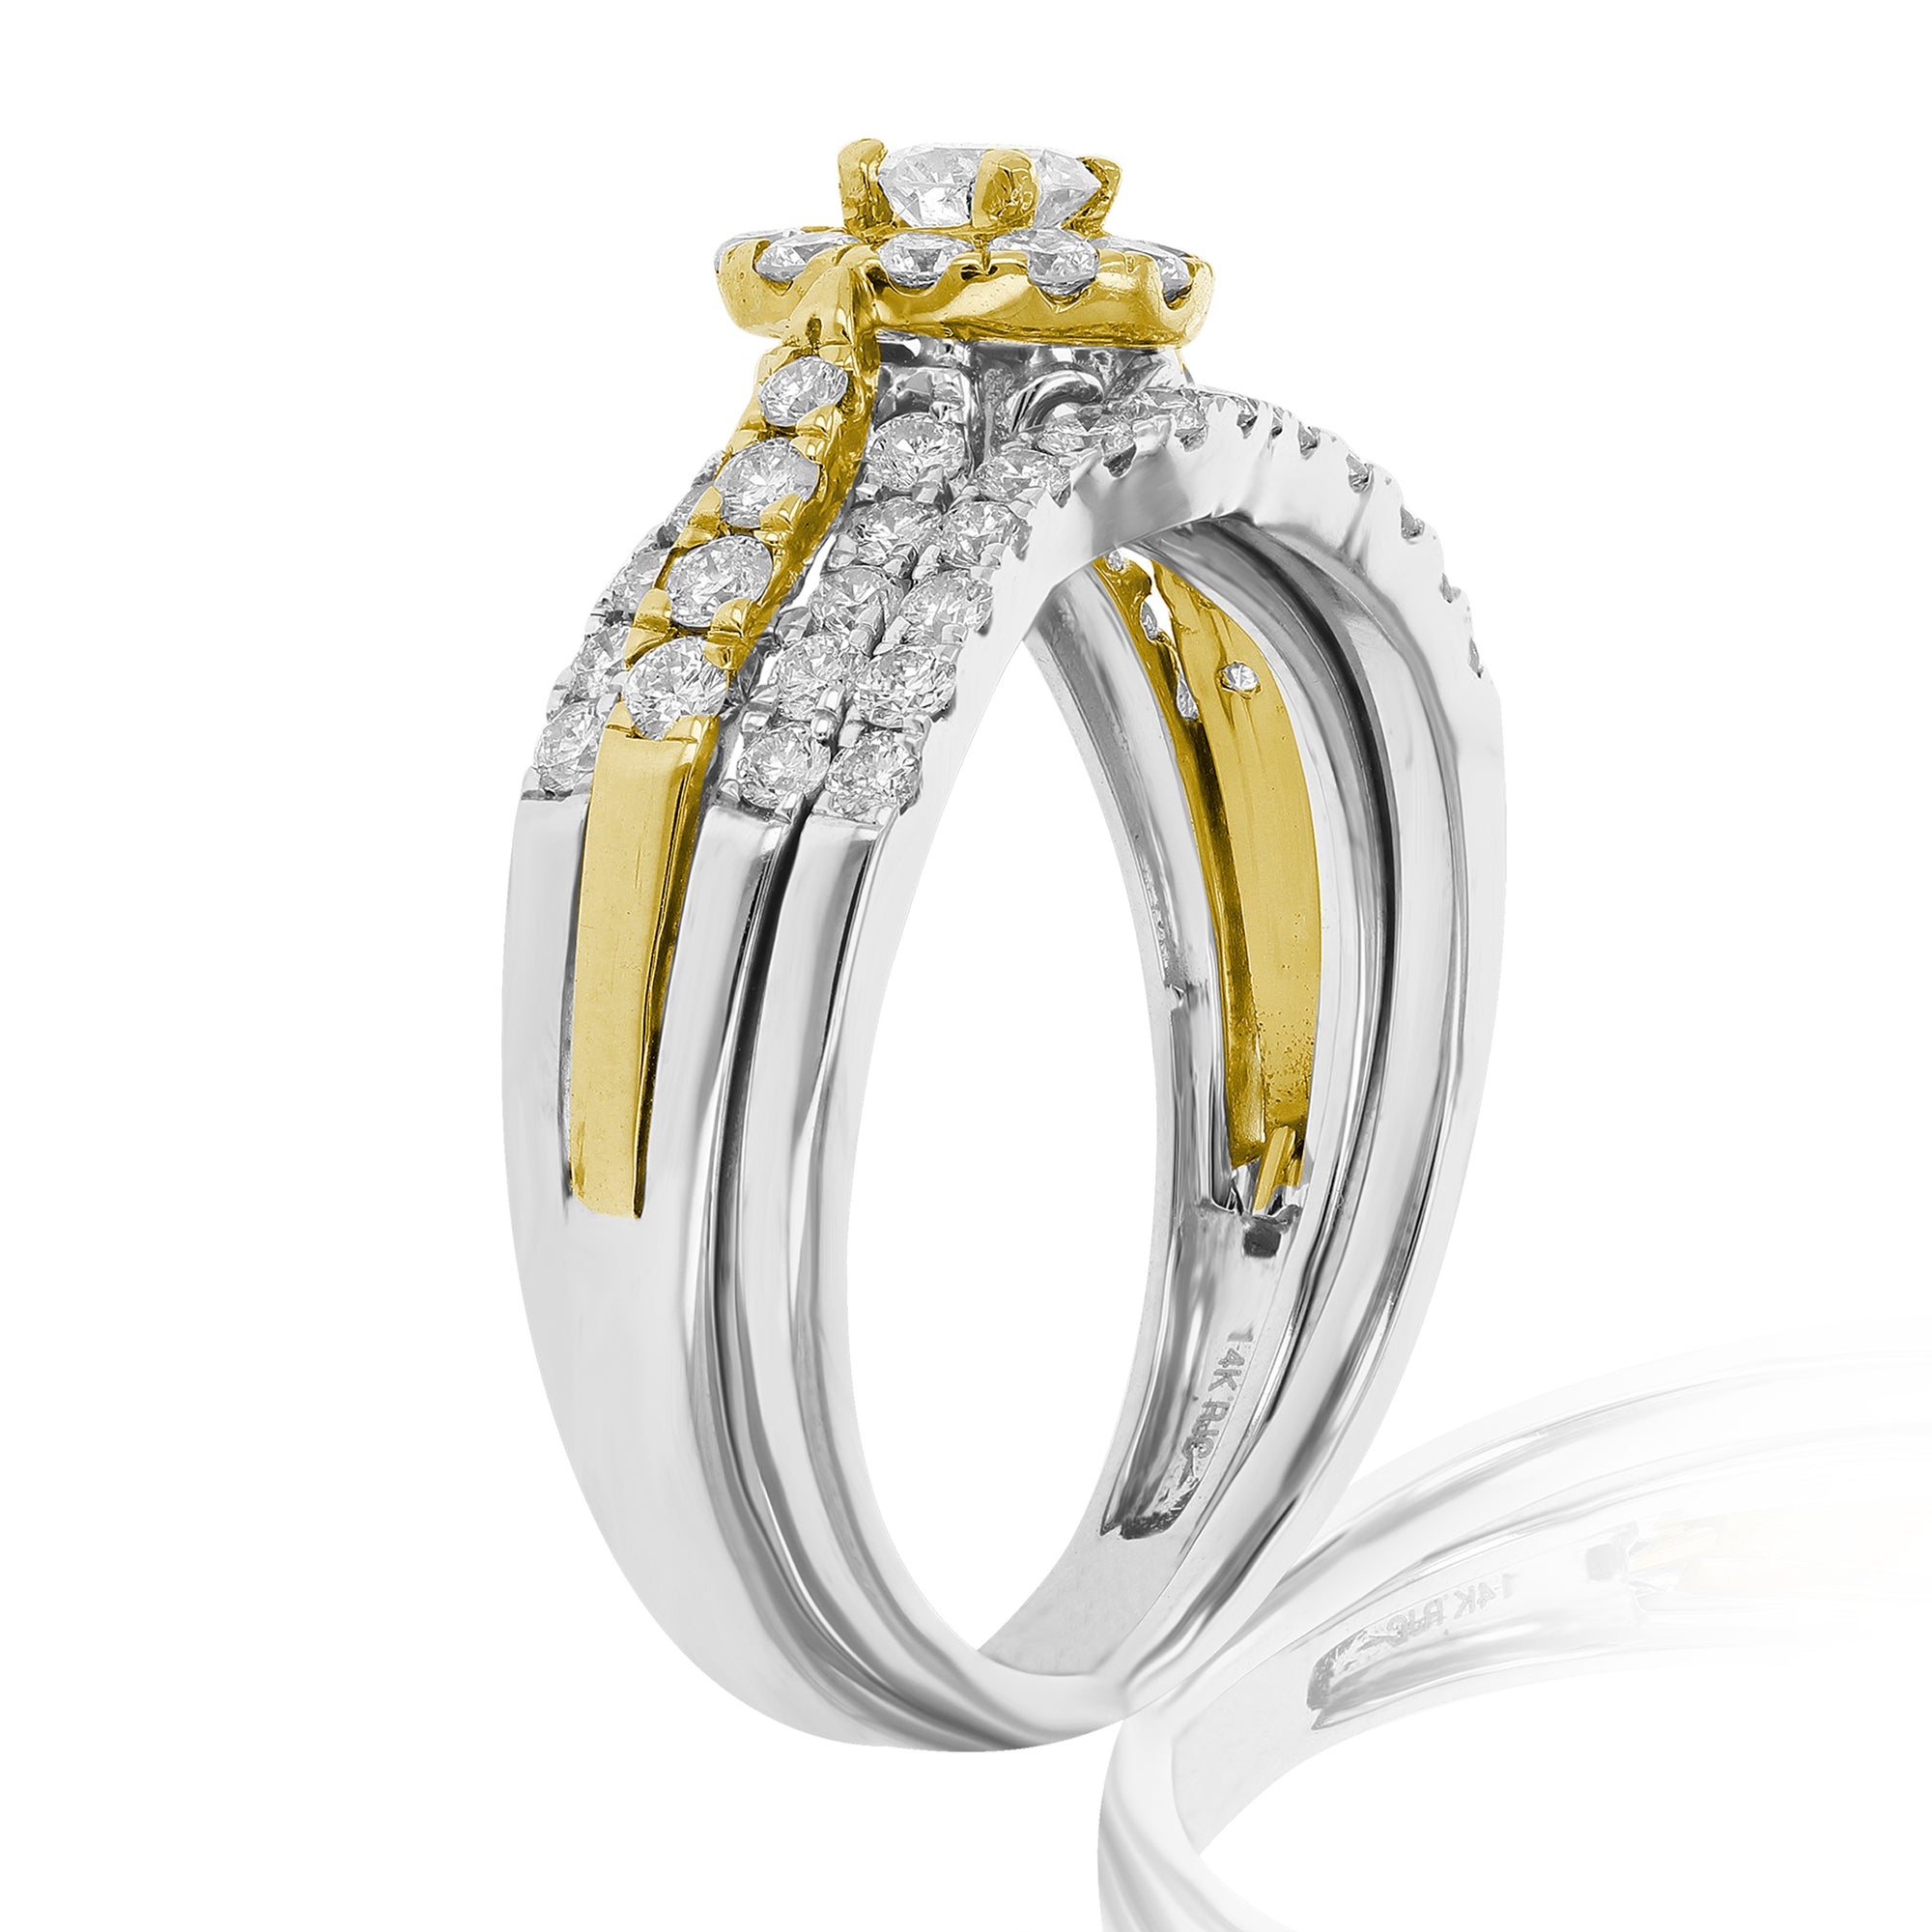 1 cttw Diamond Wedding Engagement Ring Set 14K White Yellow Gold Bridal